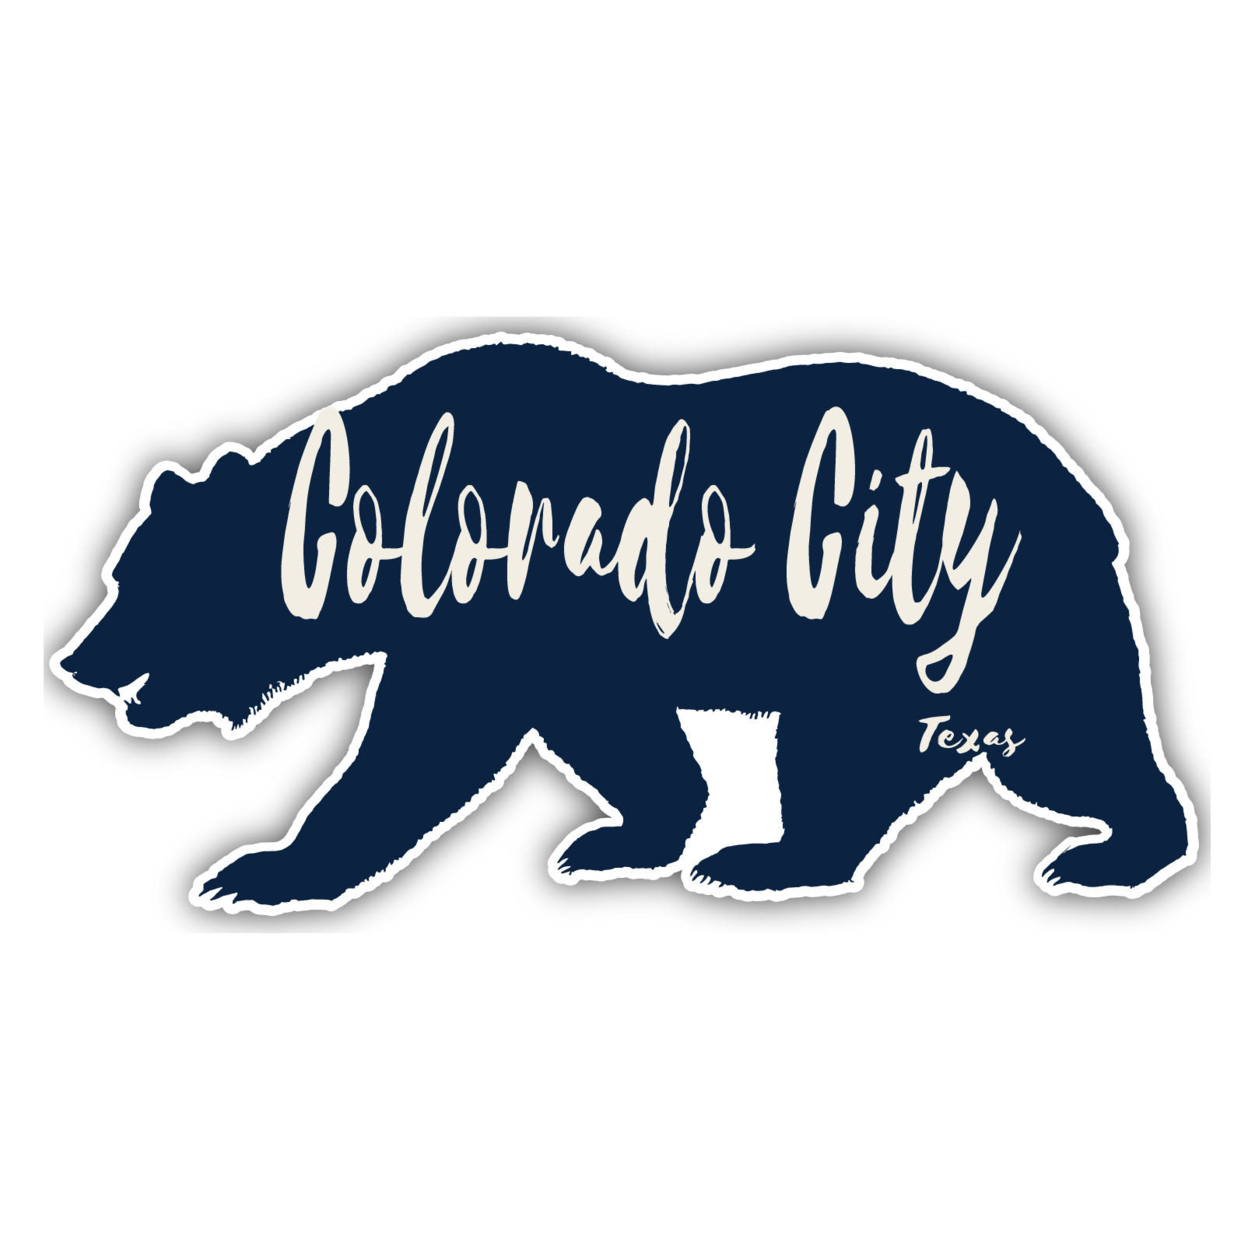 Colorado City Texas Souvenir Decorative Stickers (Choose Theme And Size) - Single Unit, 8-Inch, Bear